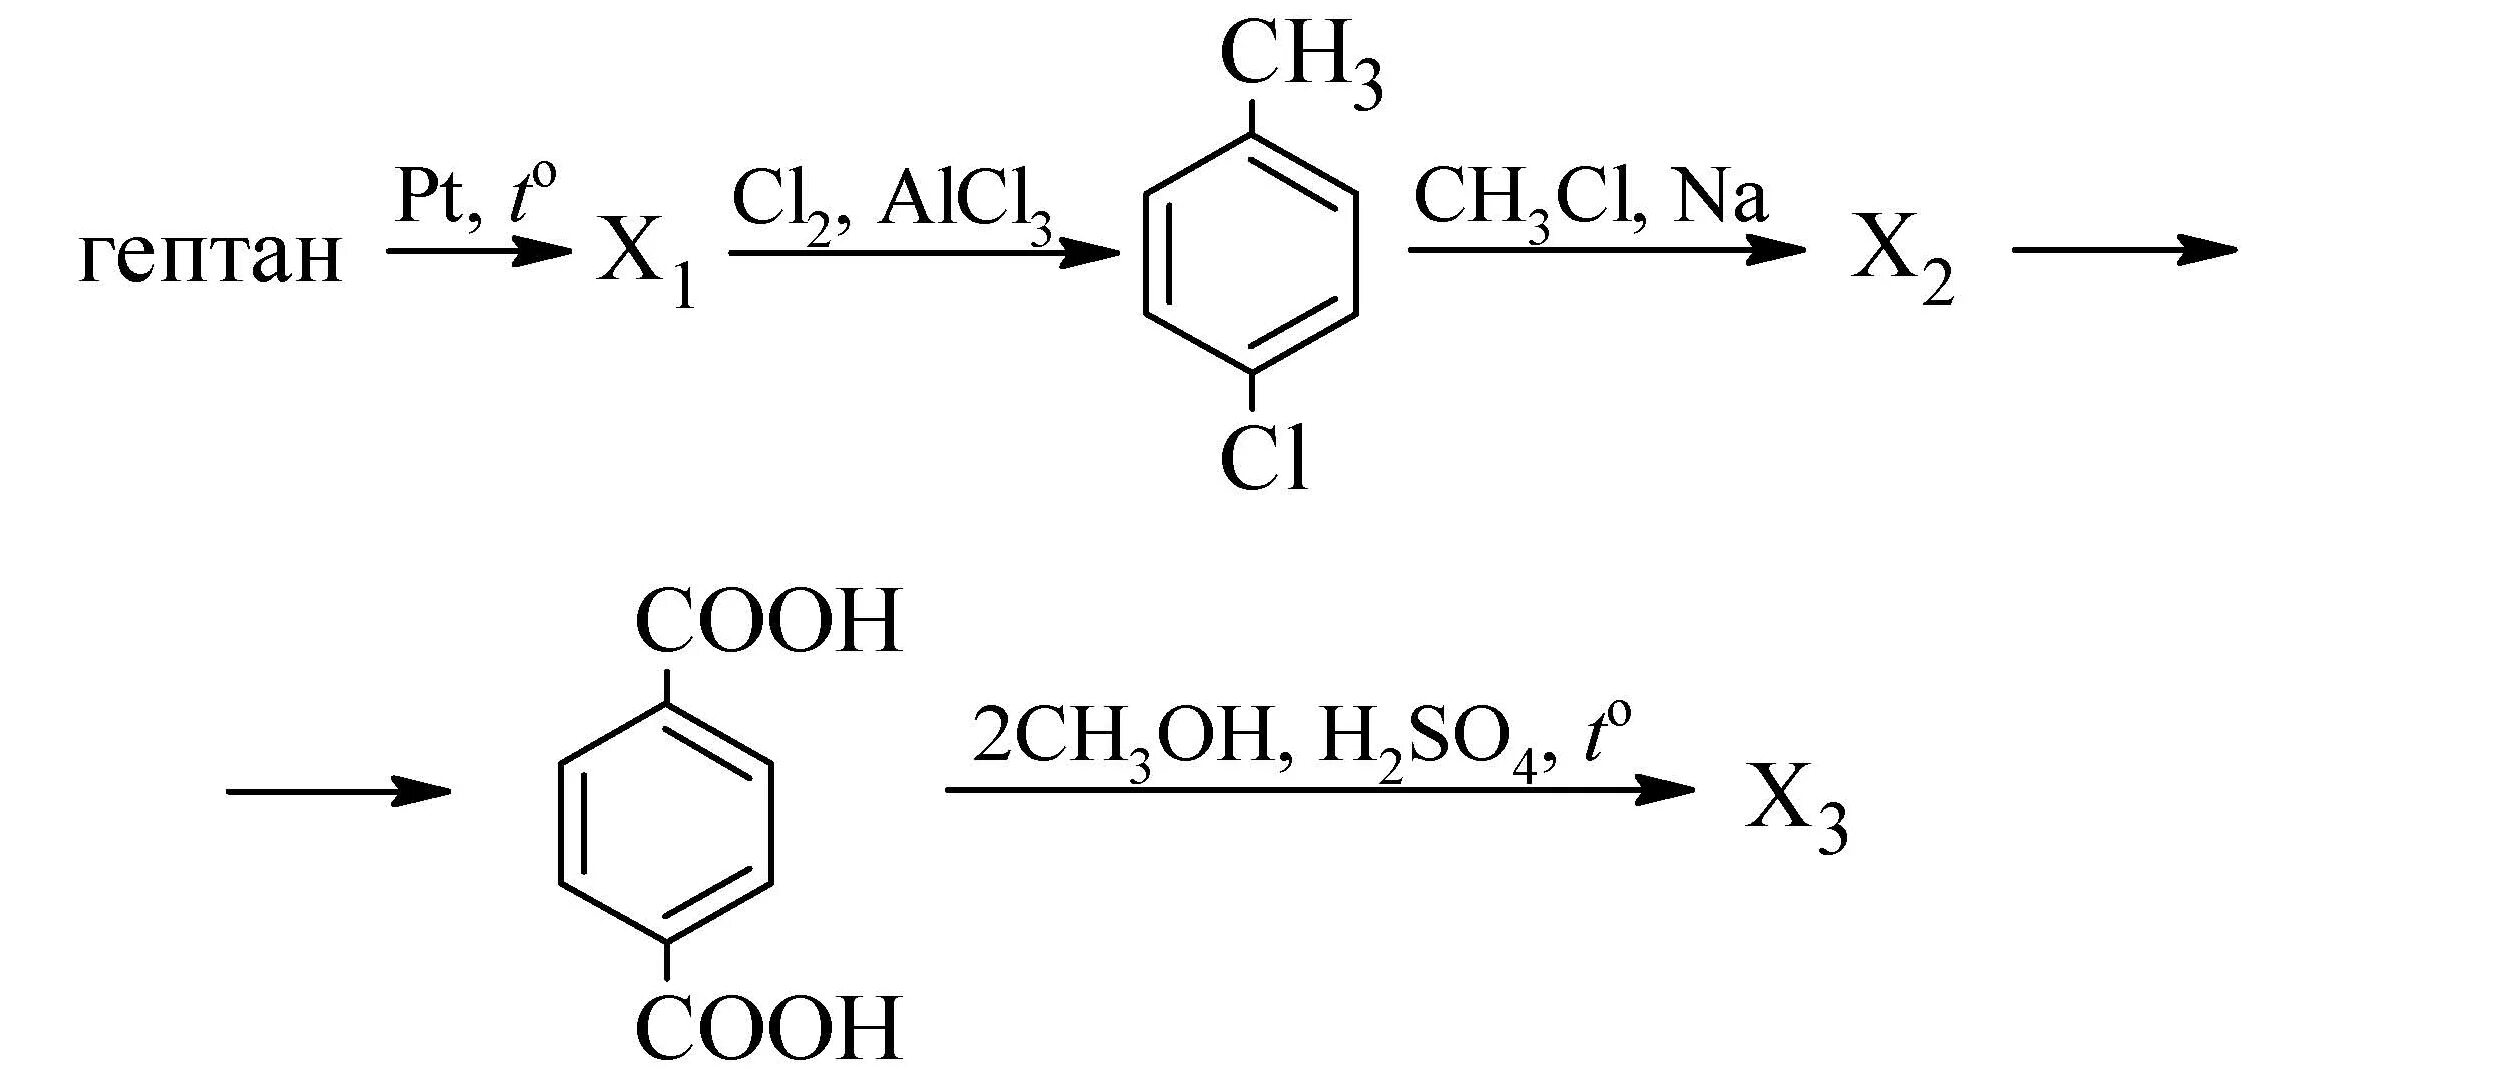 K2cr2o7 naoh реакция. Гептан pt t реакция. Гептан pt t x1 cl2. Цепочки реакций бензол. Цепочки превращения органических веществ.